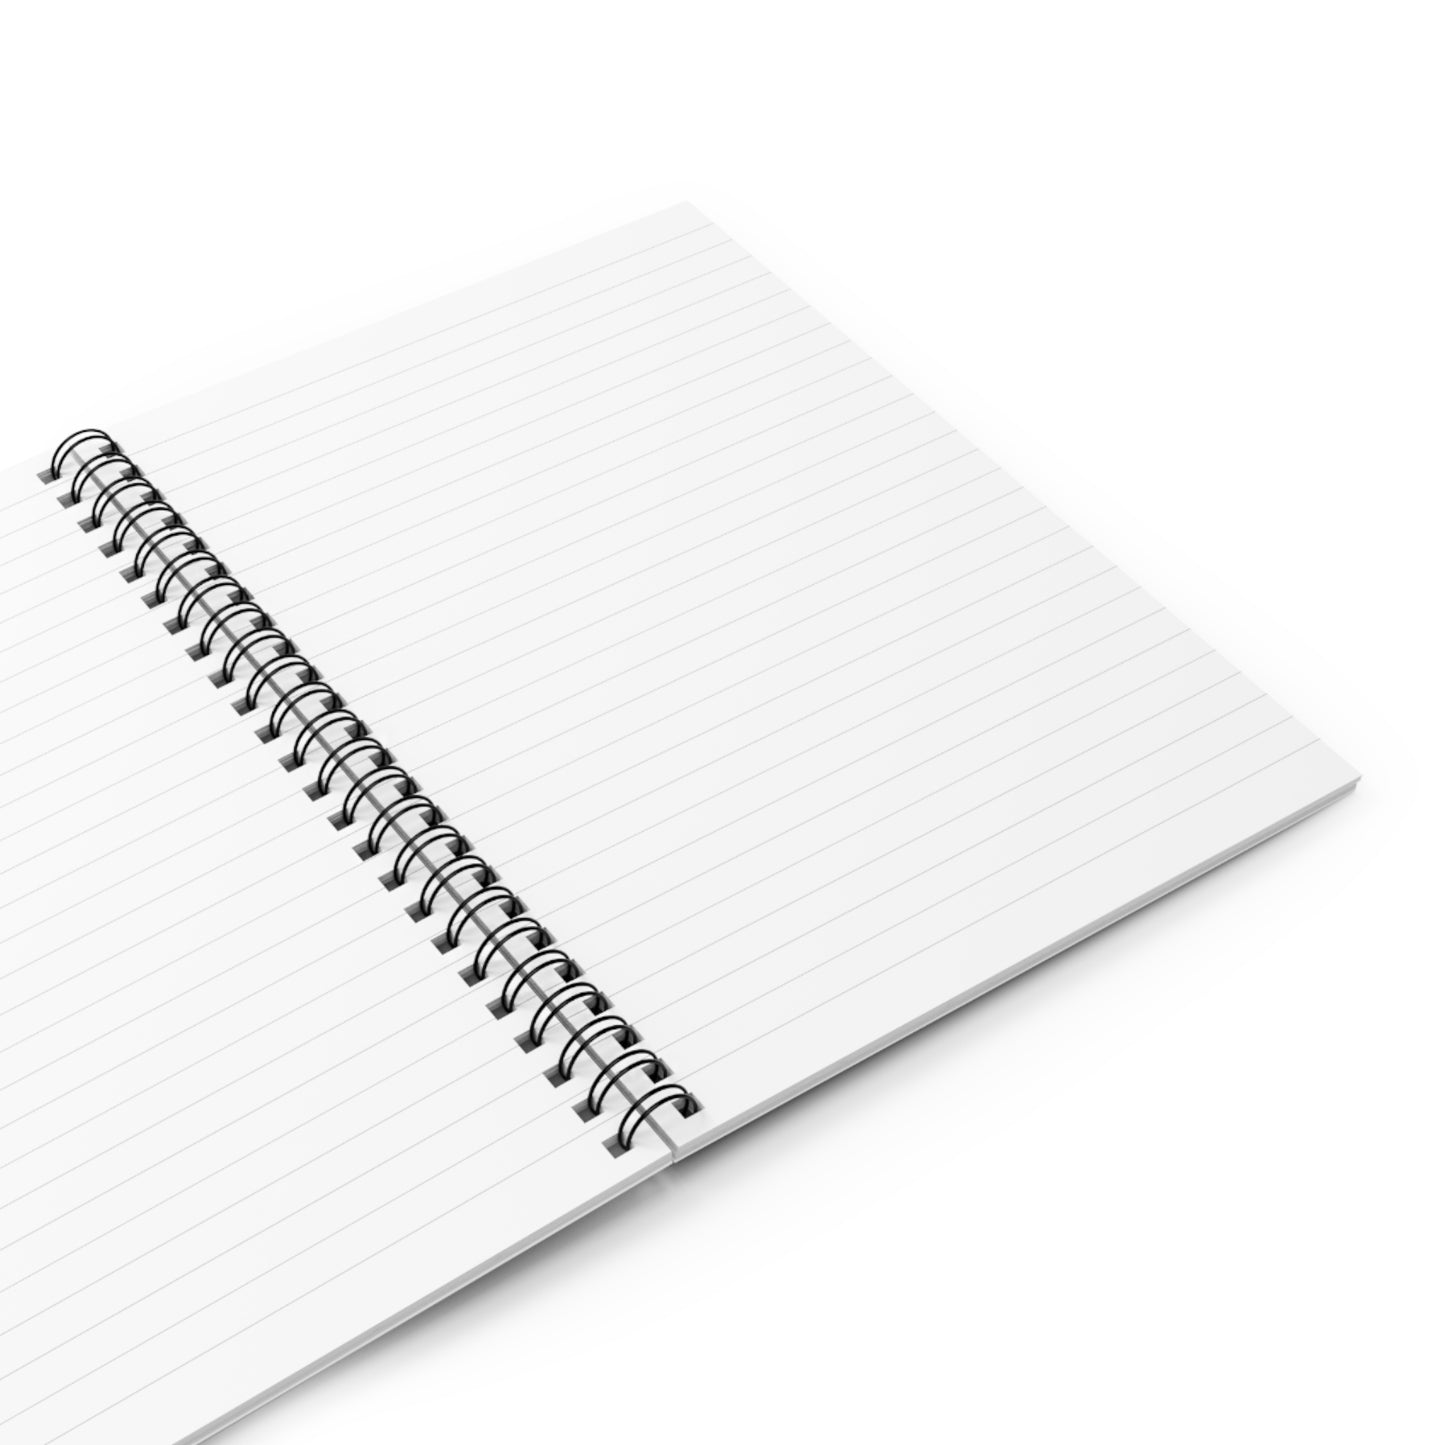 Fancy - Ruled Line Notebook